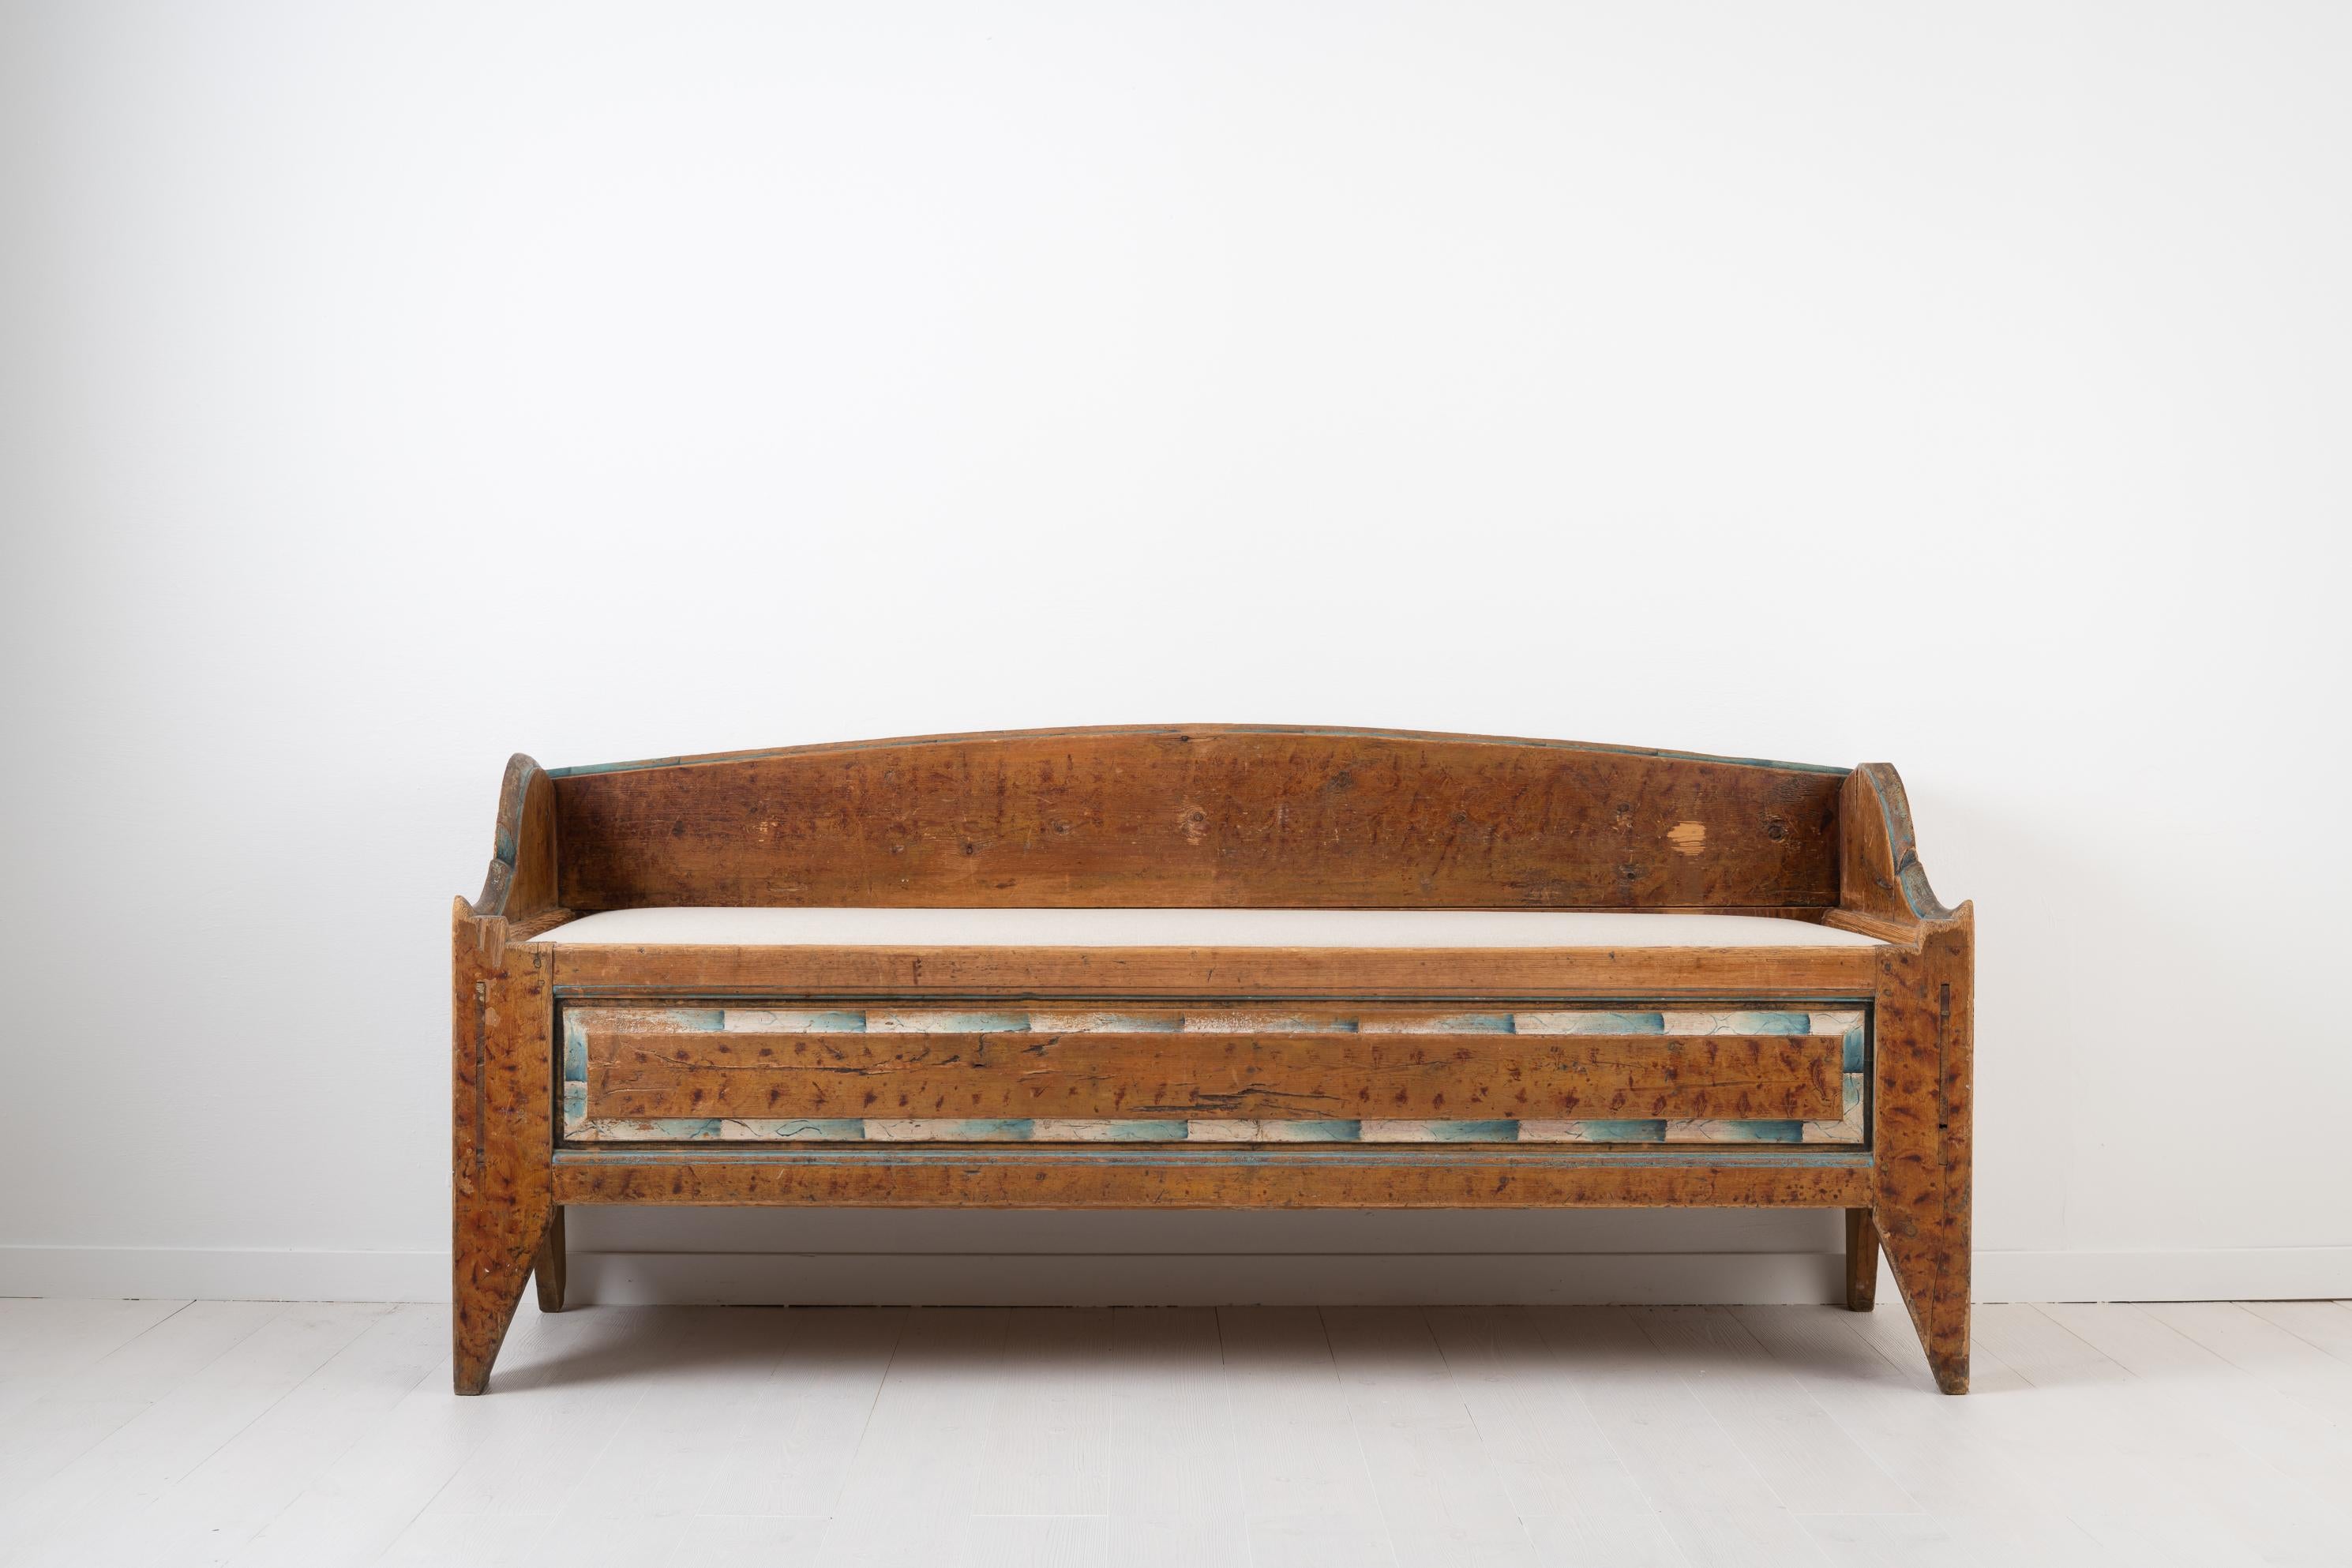 Hand-Crafted 18th Century Swedish Rustic Folk Art Bench